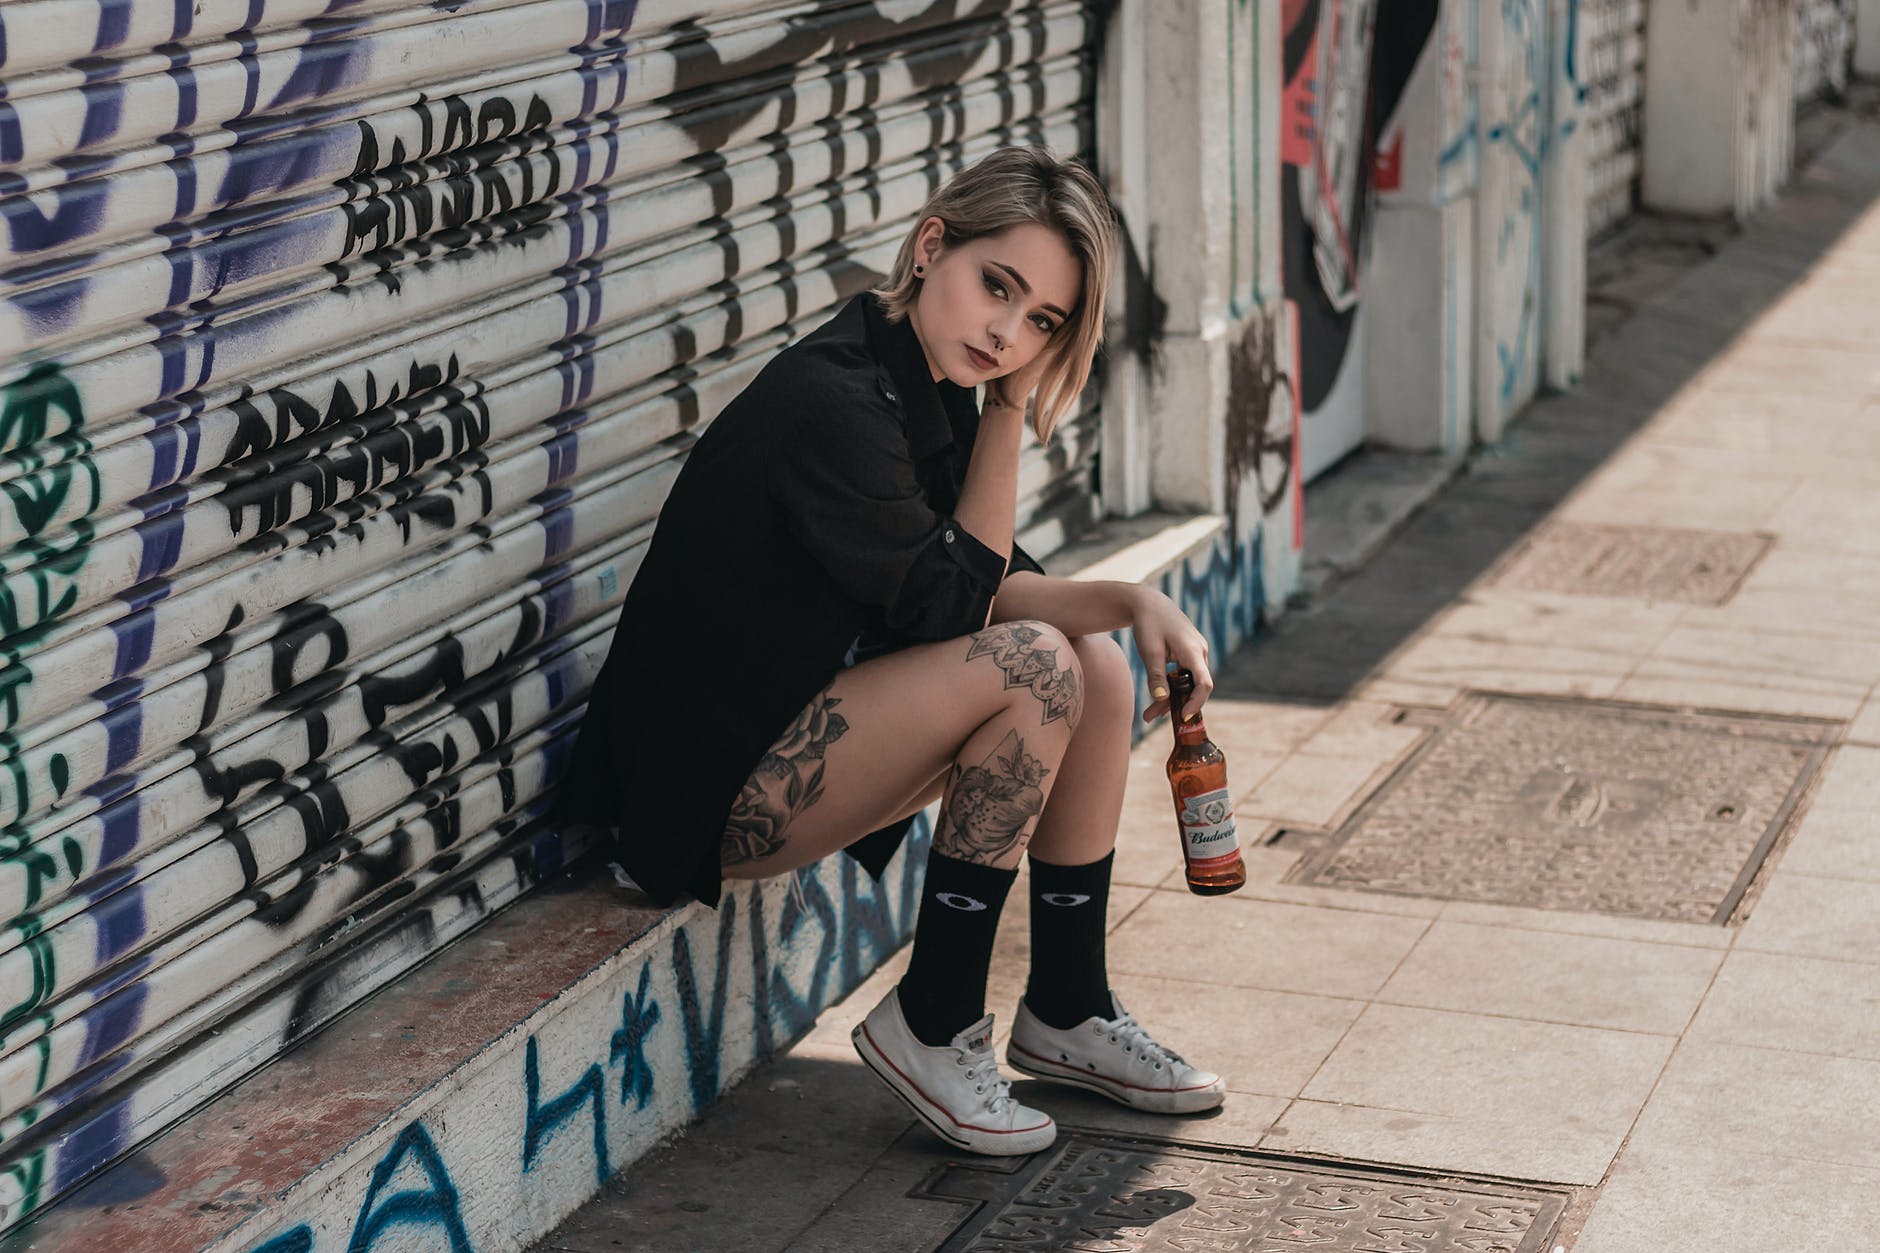 photo of tattooed woman sitting in front of rolling steel door holding beer bottle